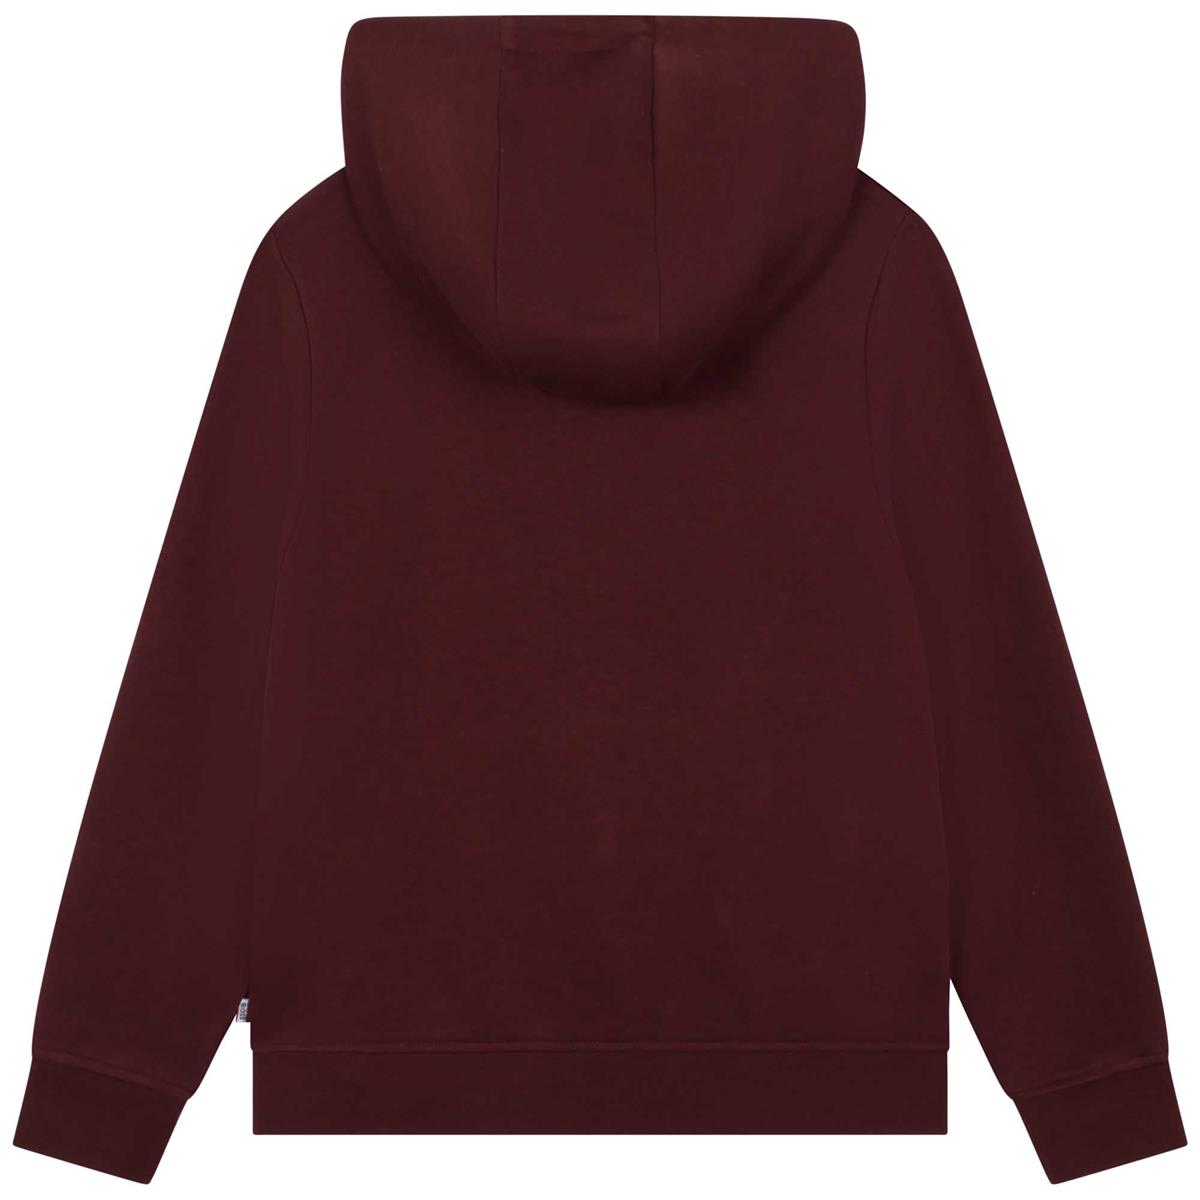 Boys & Girls Dark Red Hooded Sweatshirt